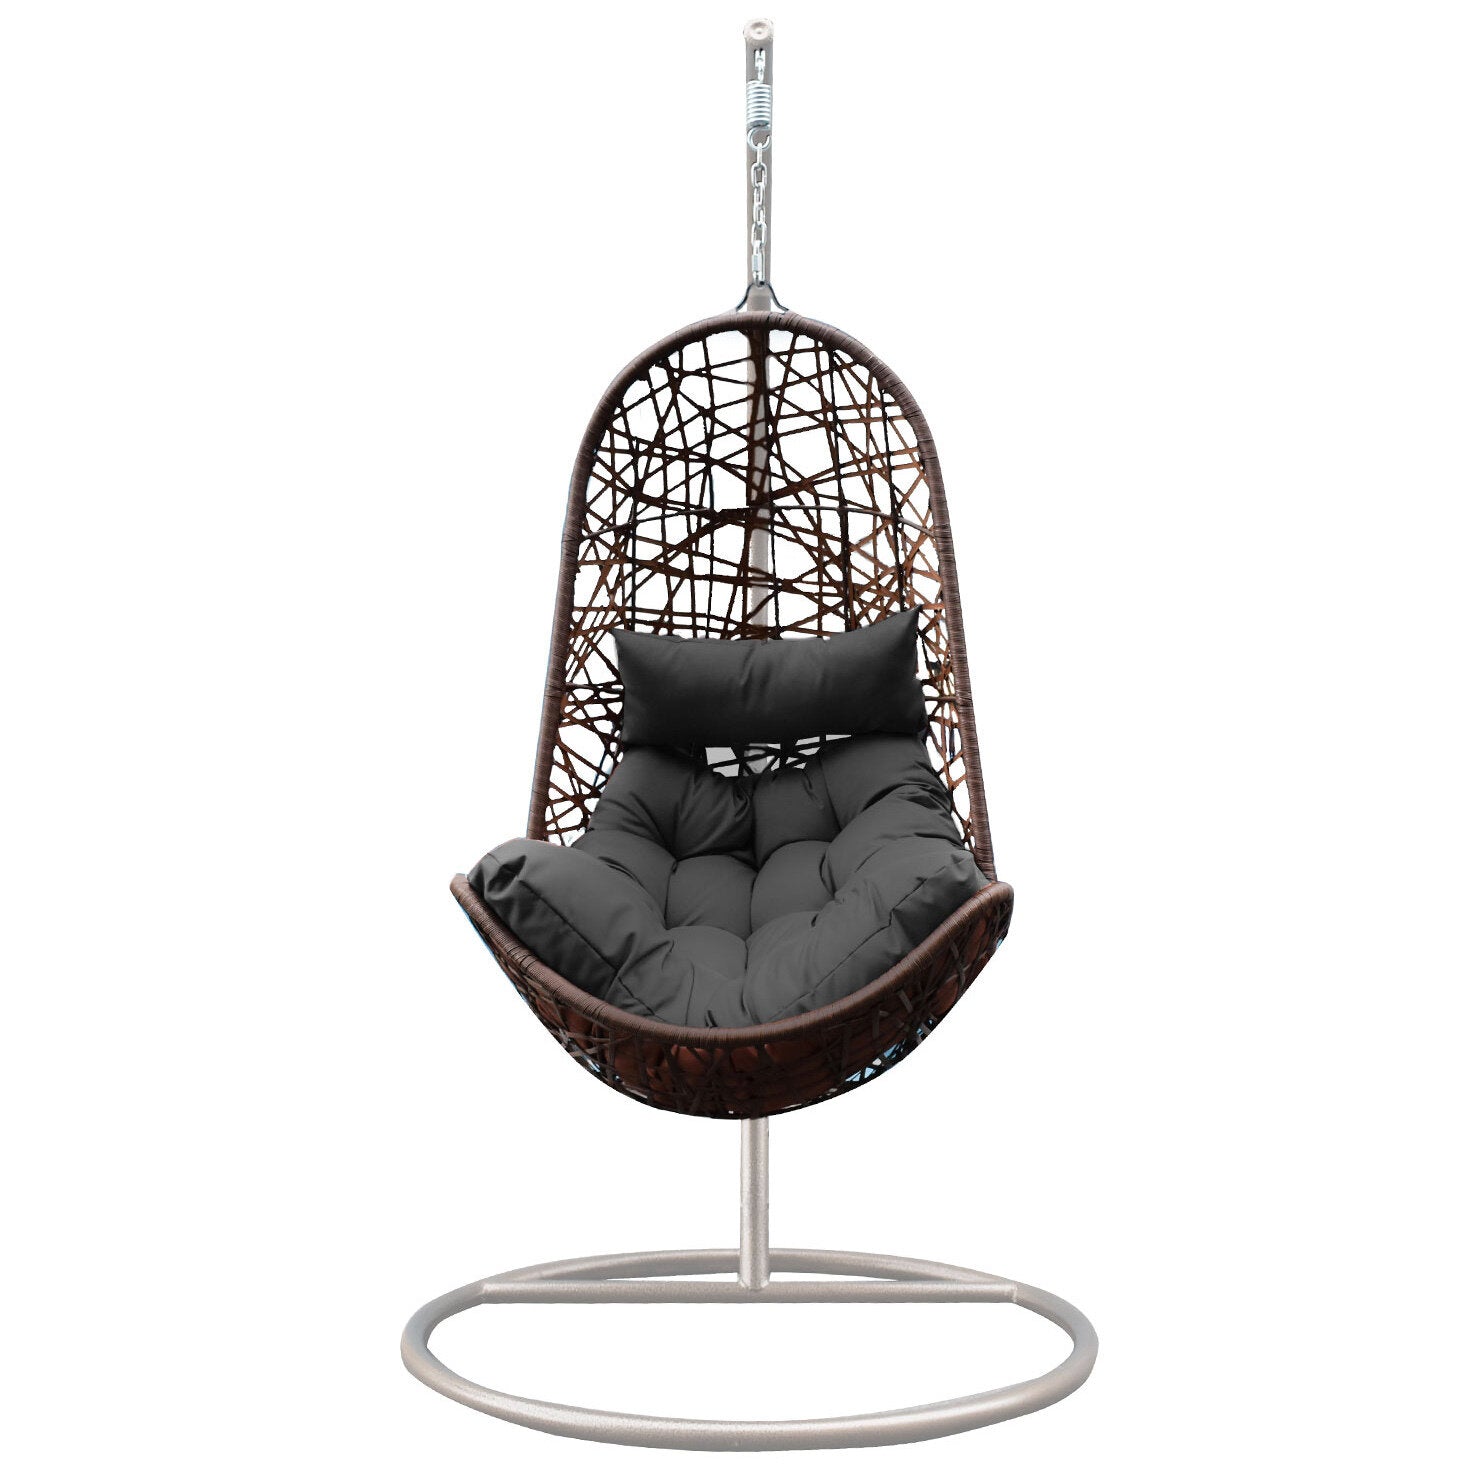 Basket Hanging Egg Chair